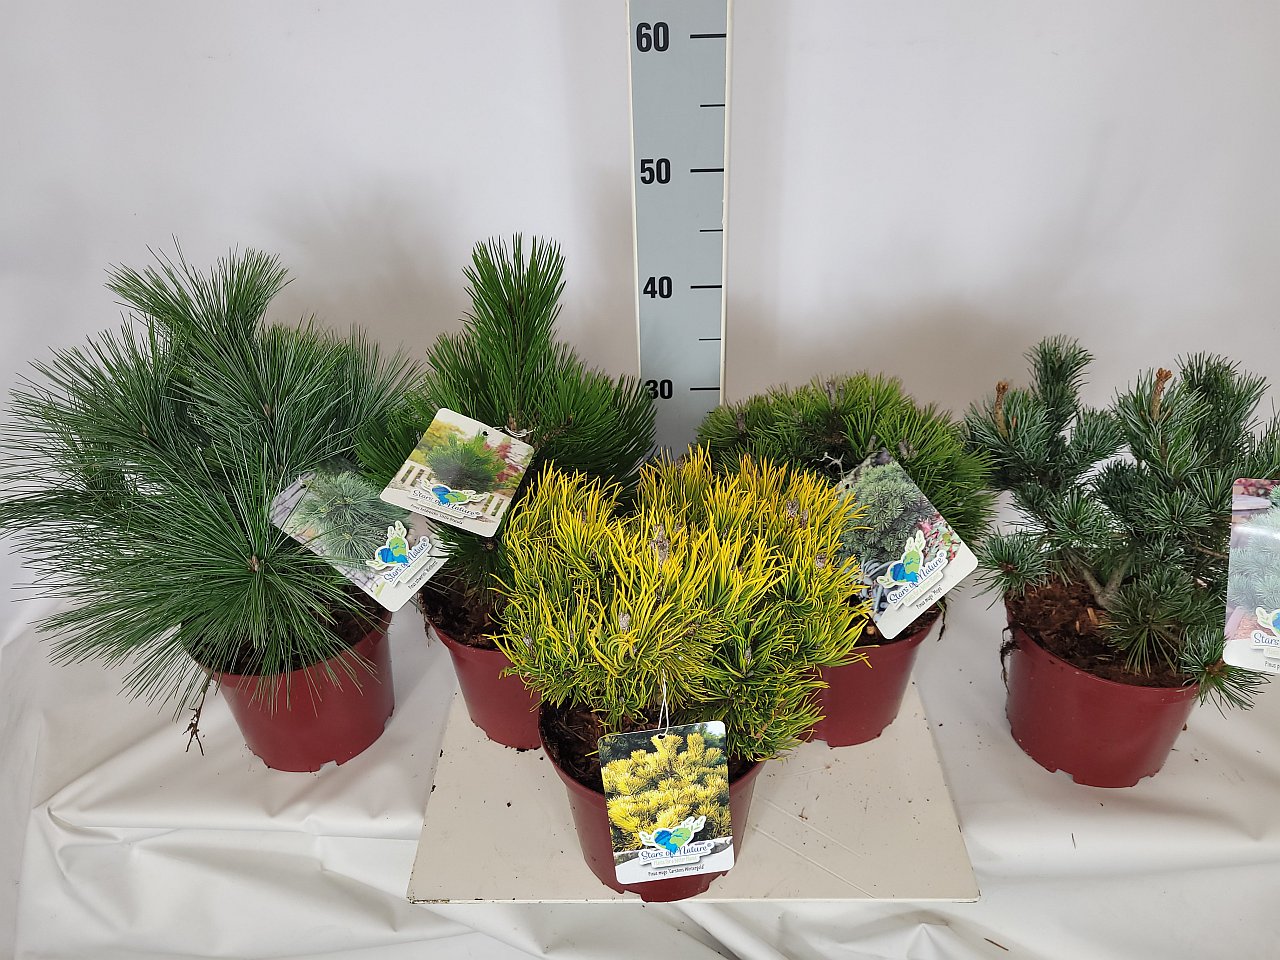 Pinus Mix - Mein Kieferngarten C 3 20- 25, 1000 Stück lieferbar, Beladung 4x21, Highlight: schöner Kiefernmix